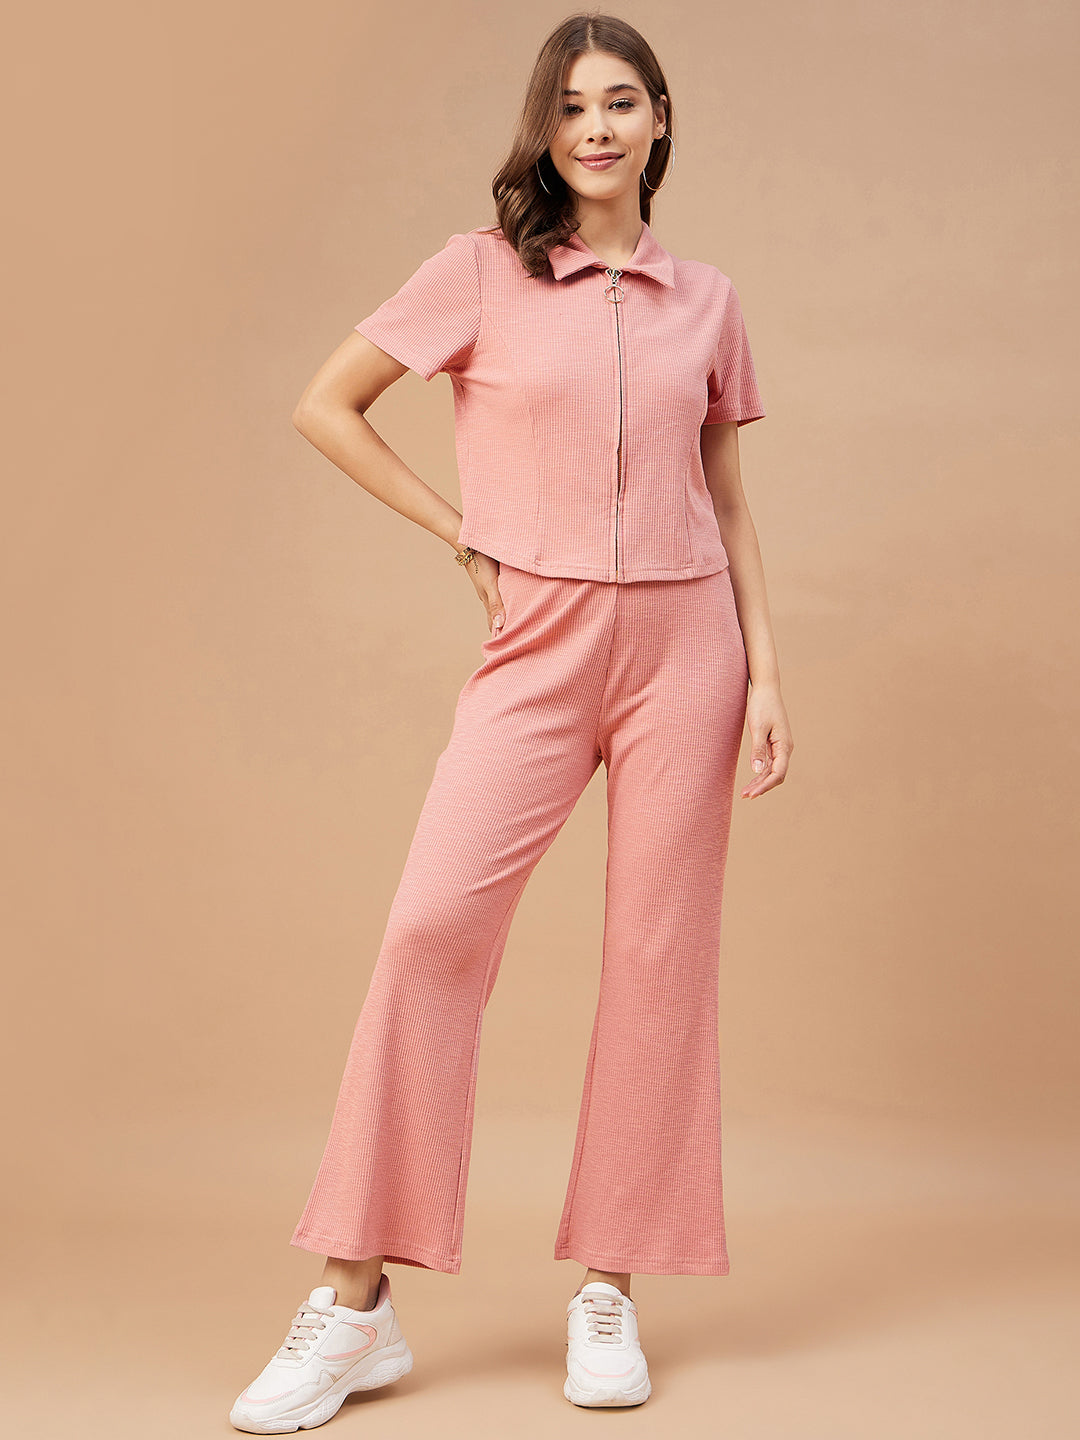 Gipsy Women Dusky Pink Solid Poly Knit Regular Sleeve Collar Neck Co-Ord Set